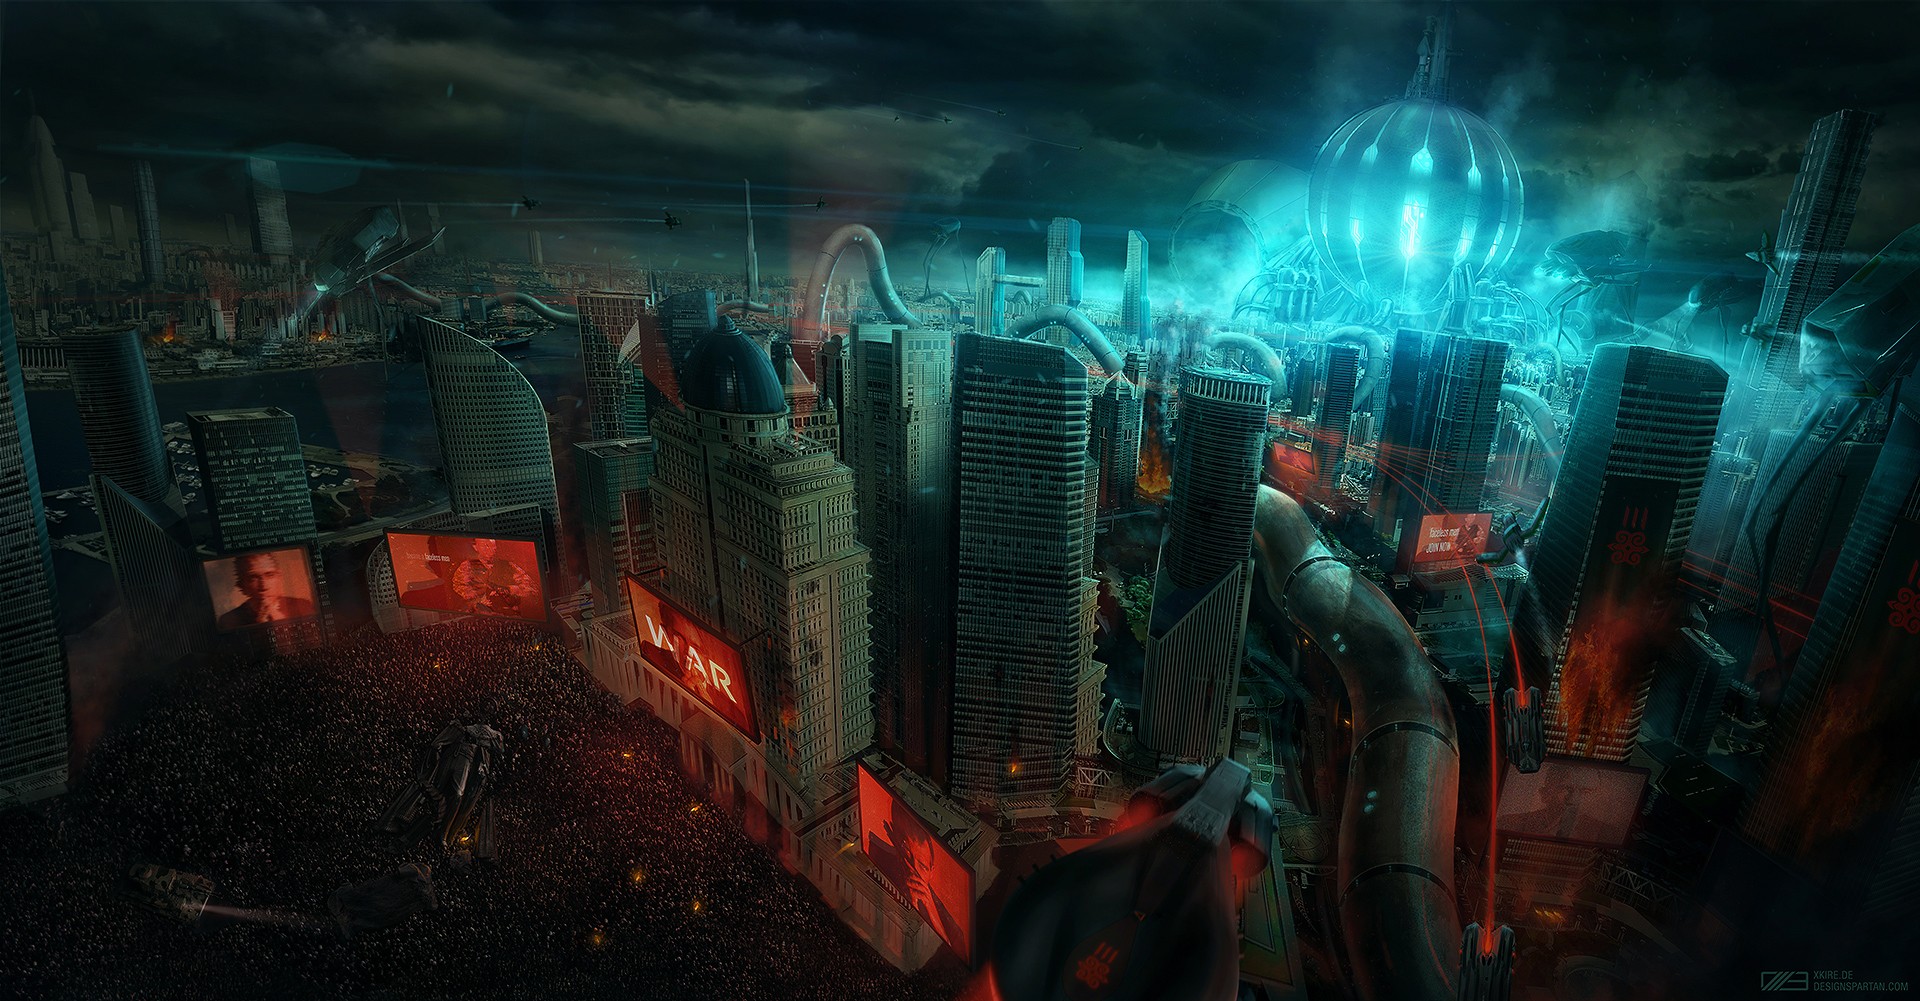 General 1920x1001 digital art city robot war aliens science fiction dark futuristic city apocalyptic cyan